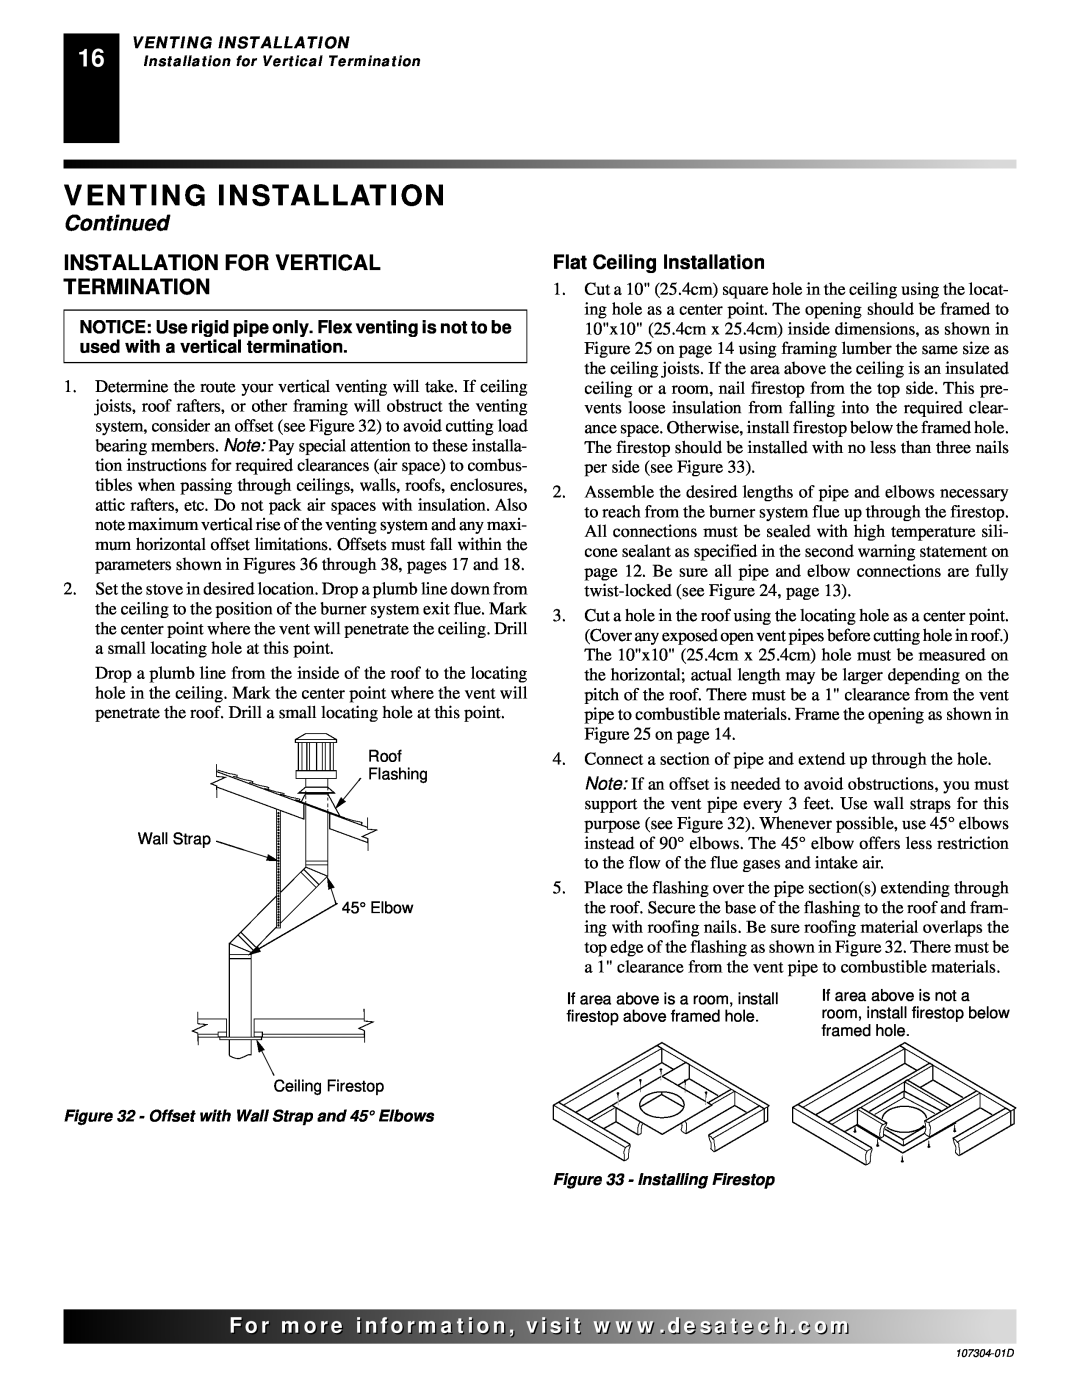 Desa SDVBPC, SDVBNC Installation For Vertical Termination, Venting Installation, Continued, Flat Ceiling Installation 